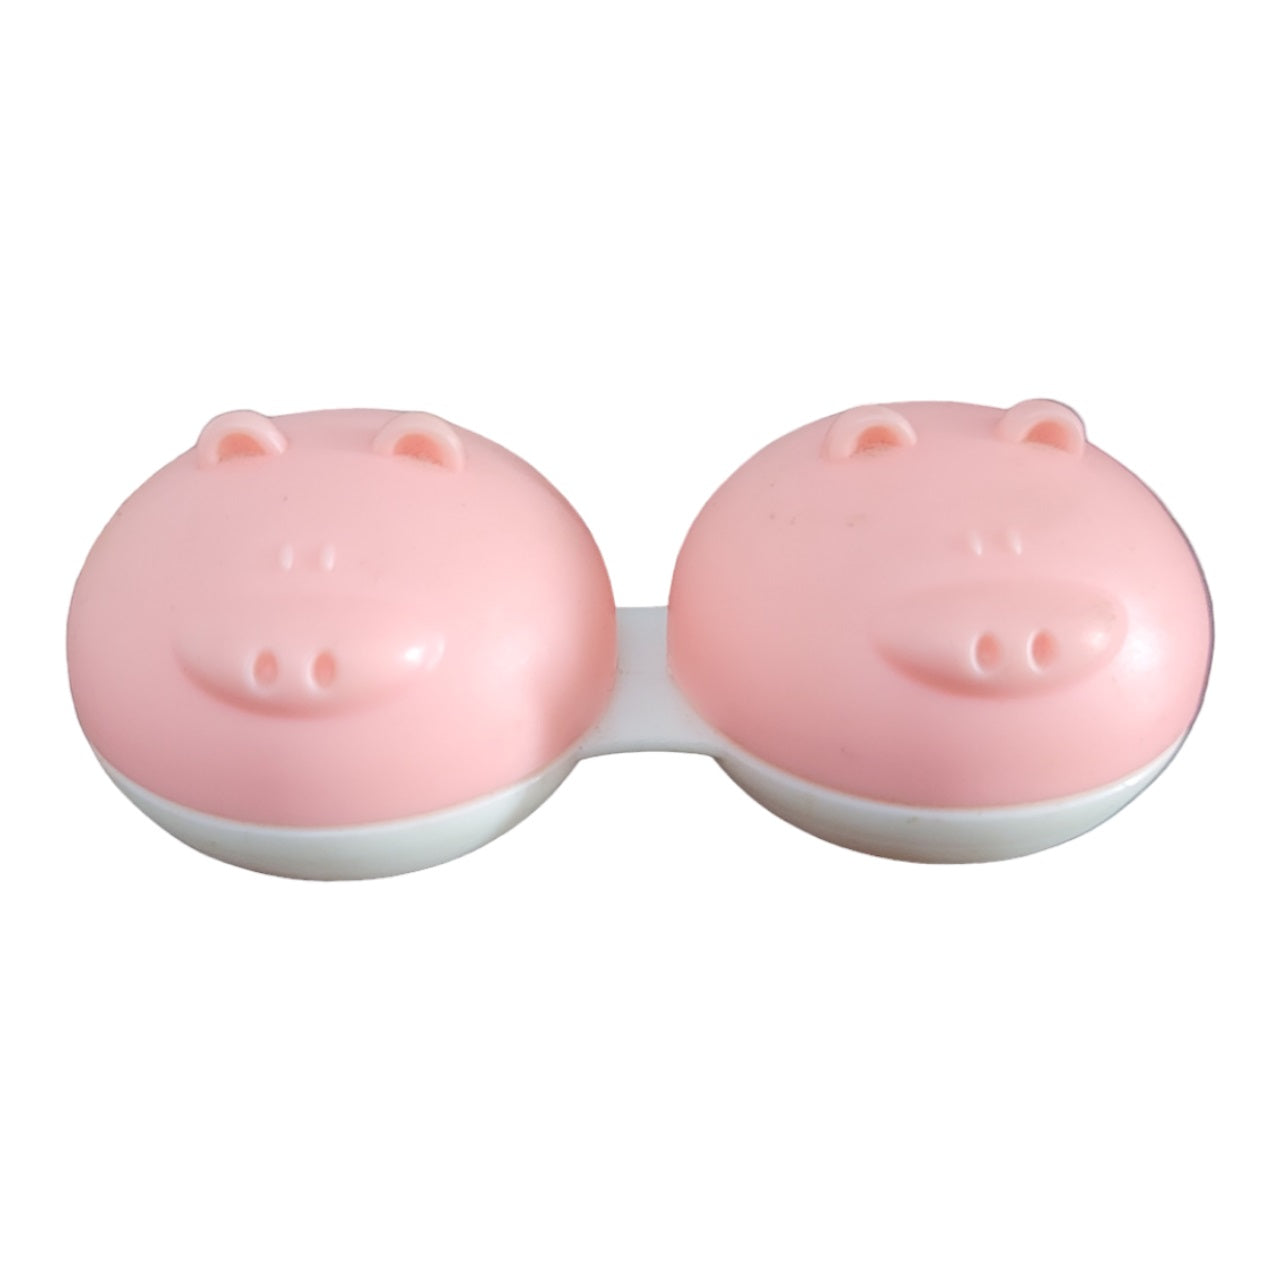 Pig Contact Lens Case | Fancy Contact Lenses Case Pink Color by Affaires Qcase-0045